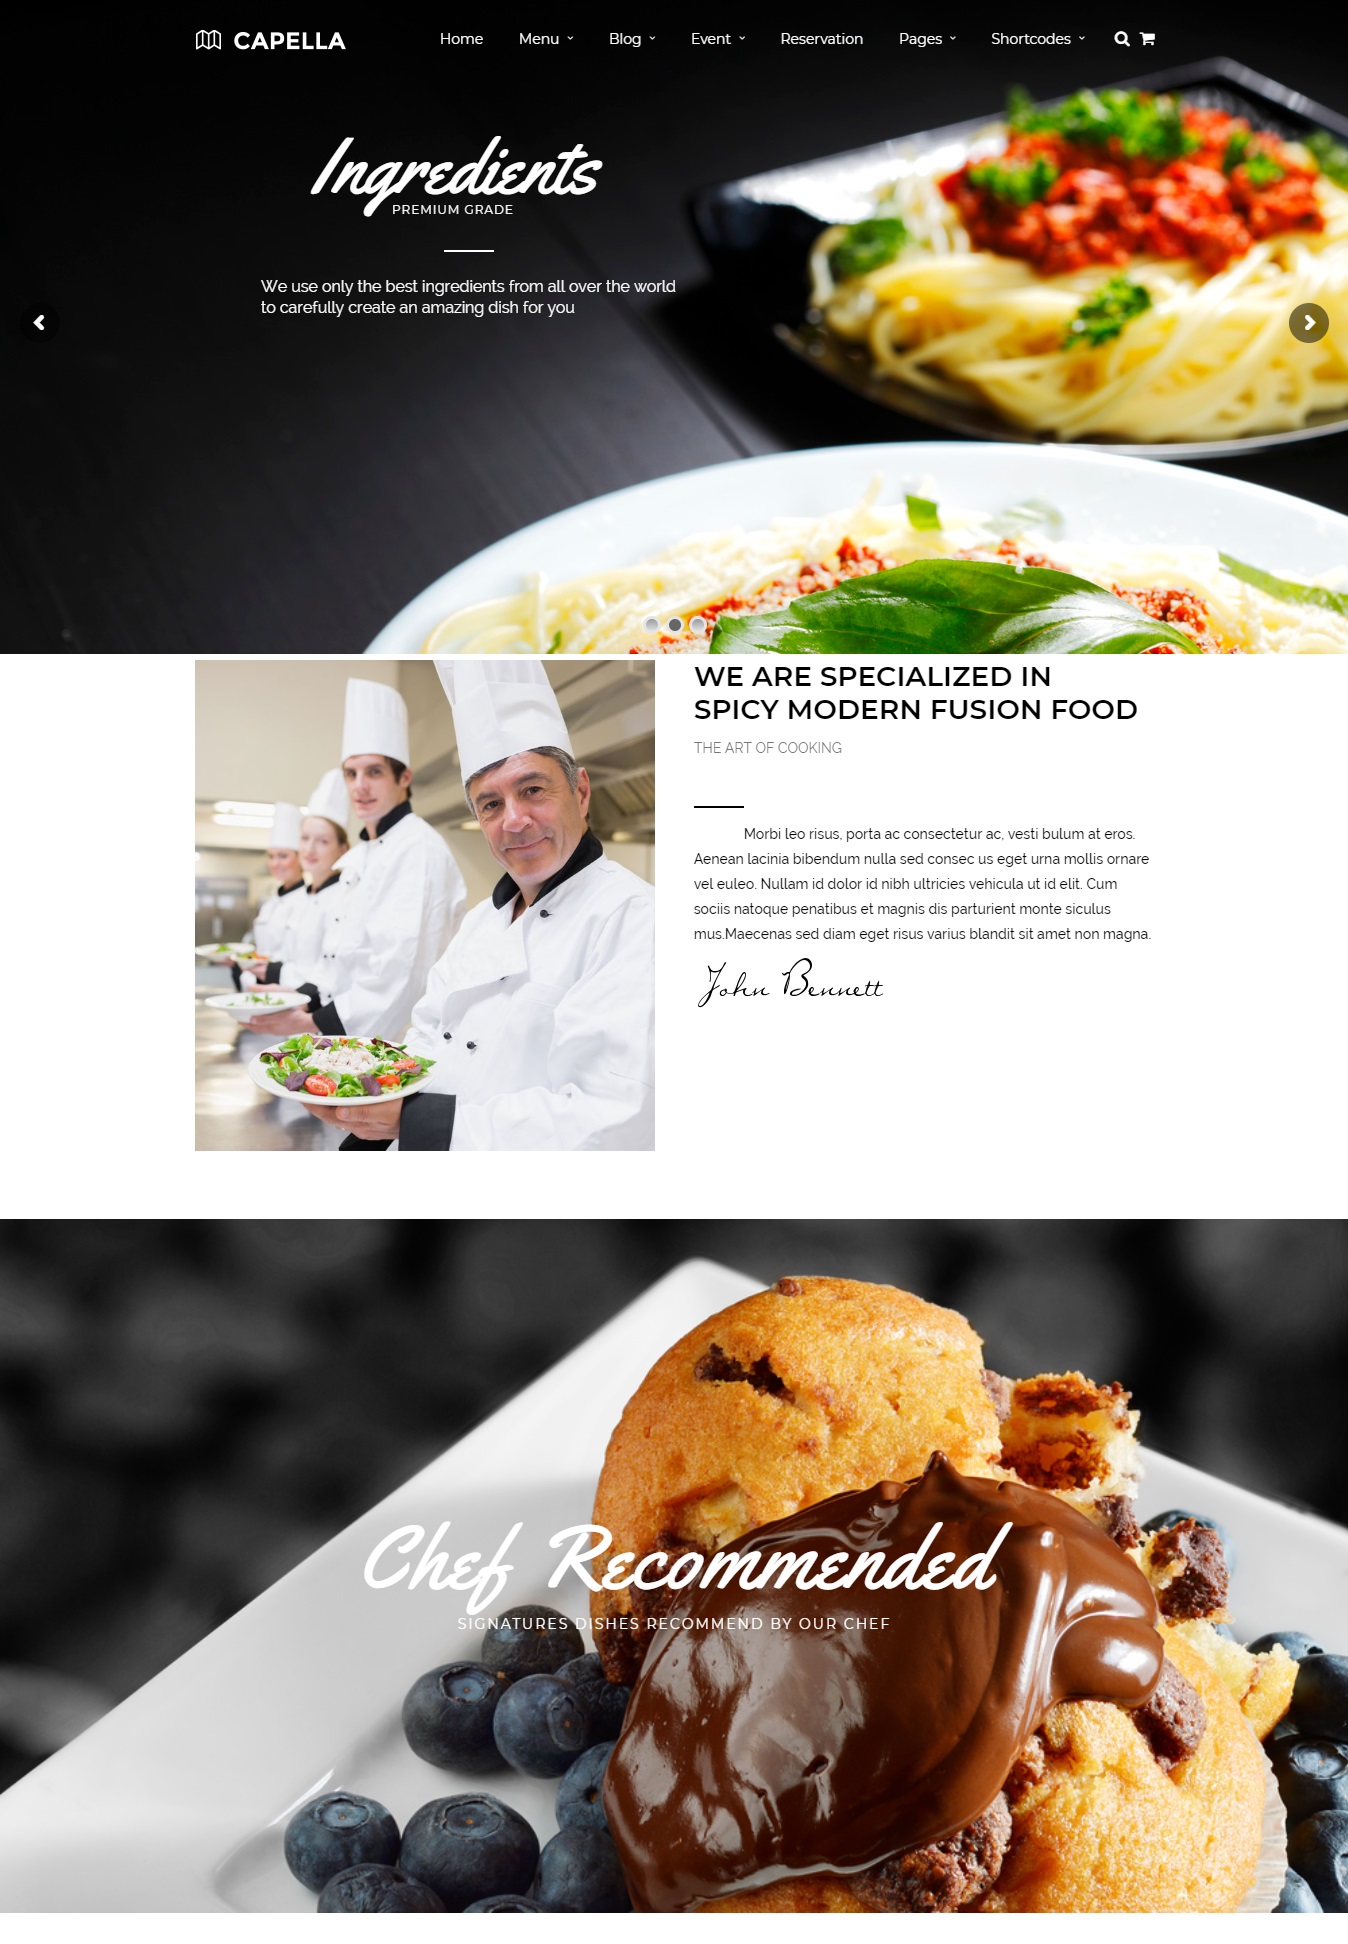 Giao diện website nhà hàng - Capella